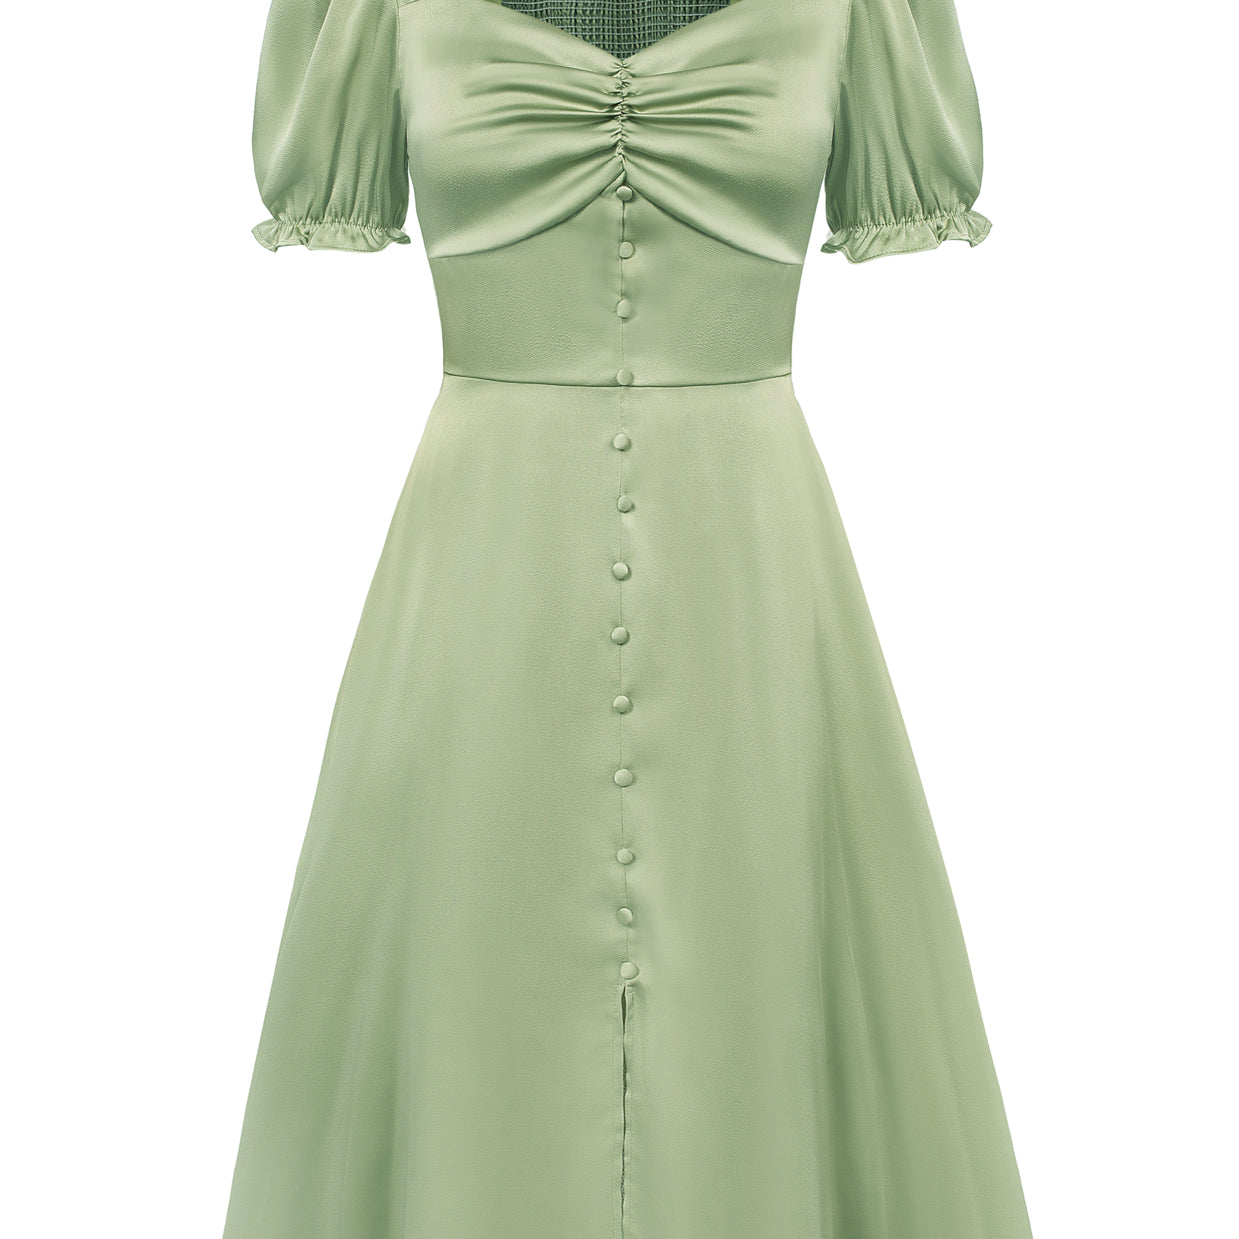 Summer Puff Short Sleeve Cottagecore Dress Vintage 1950s Party Swing Dresses